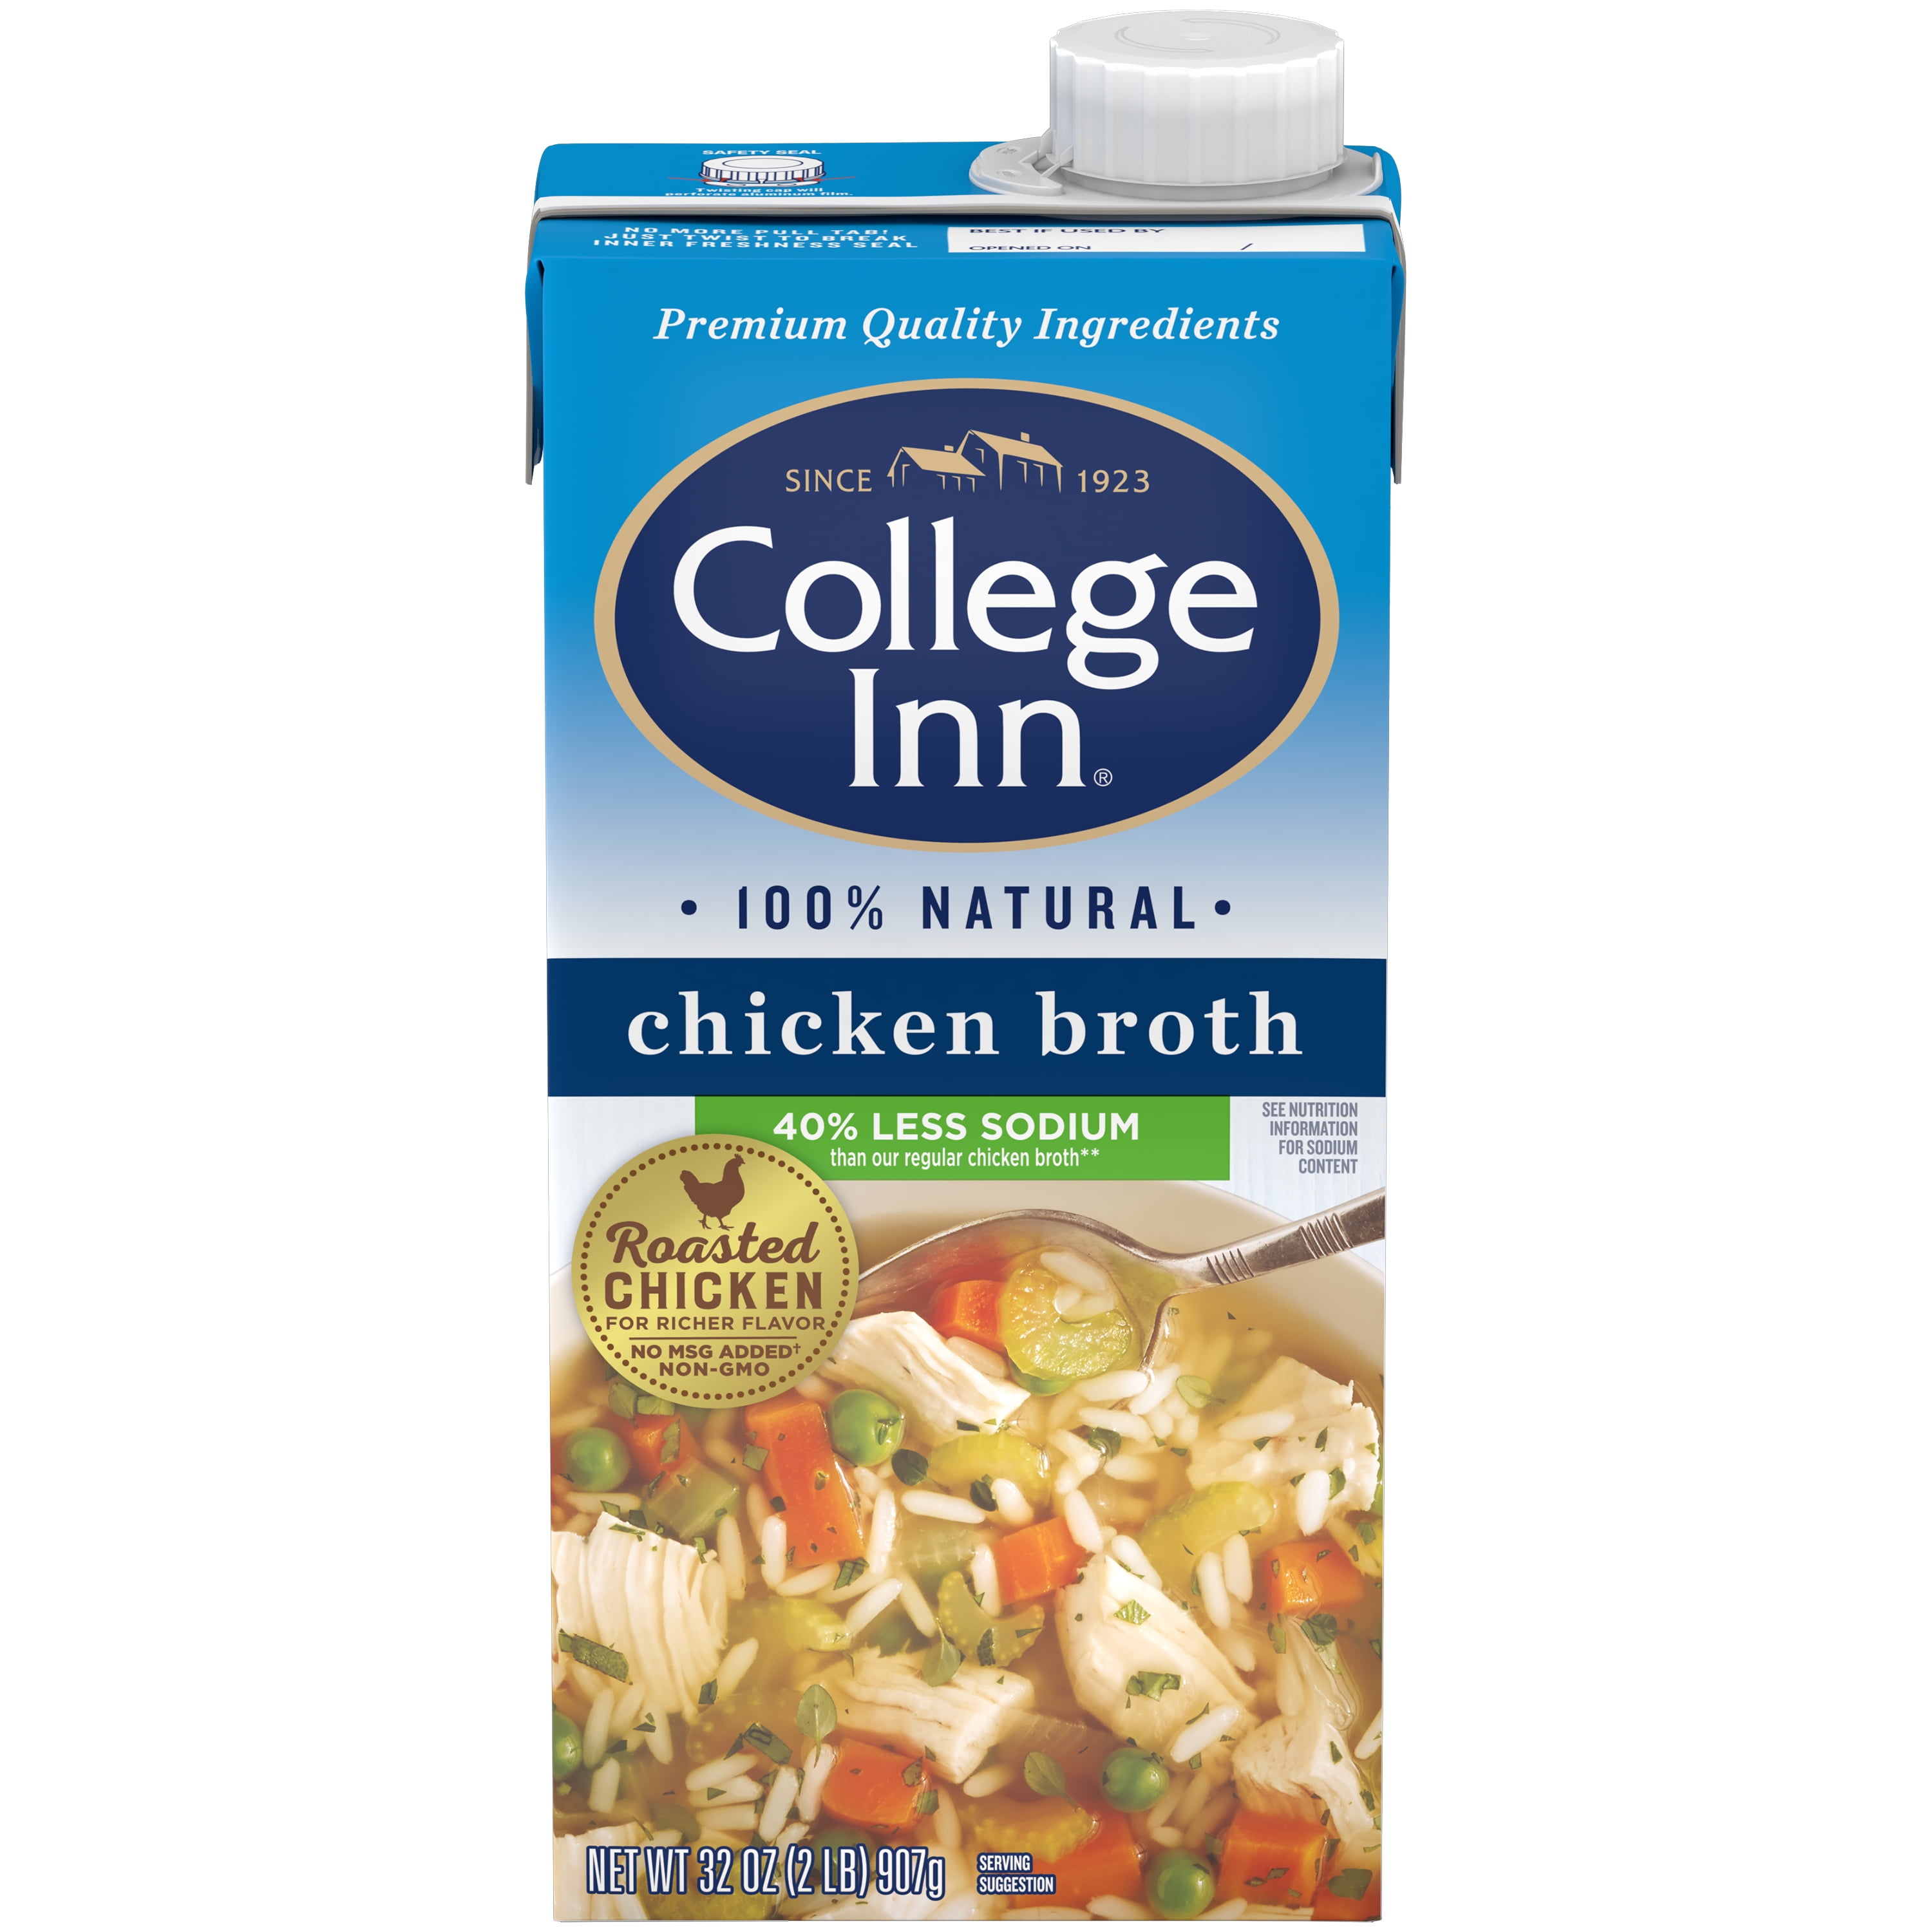 College Inn 40% Less Sodium Chicken Broth, 32 oz Carton